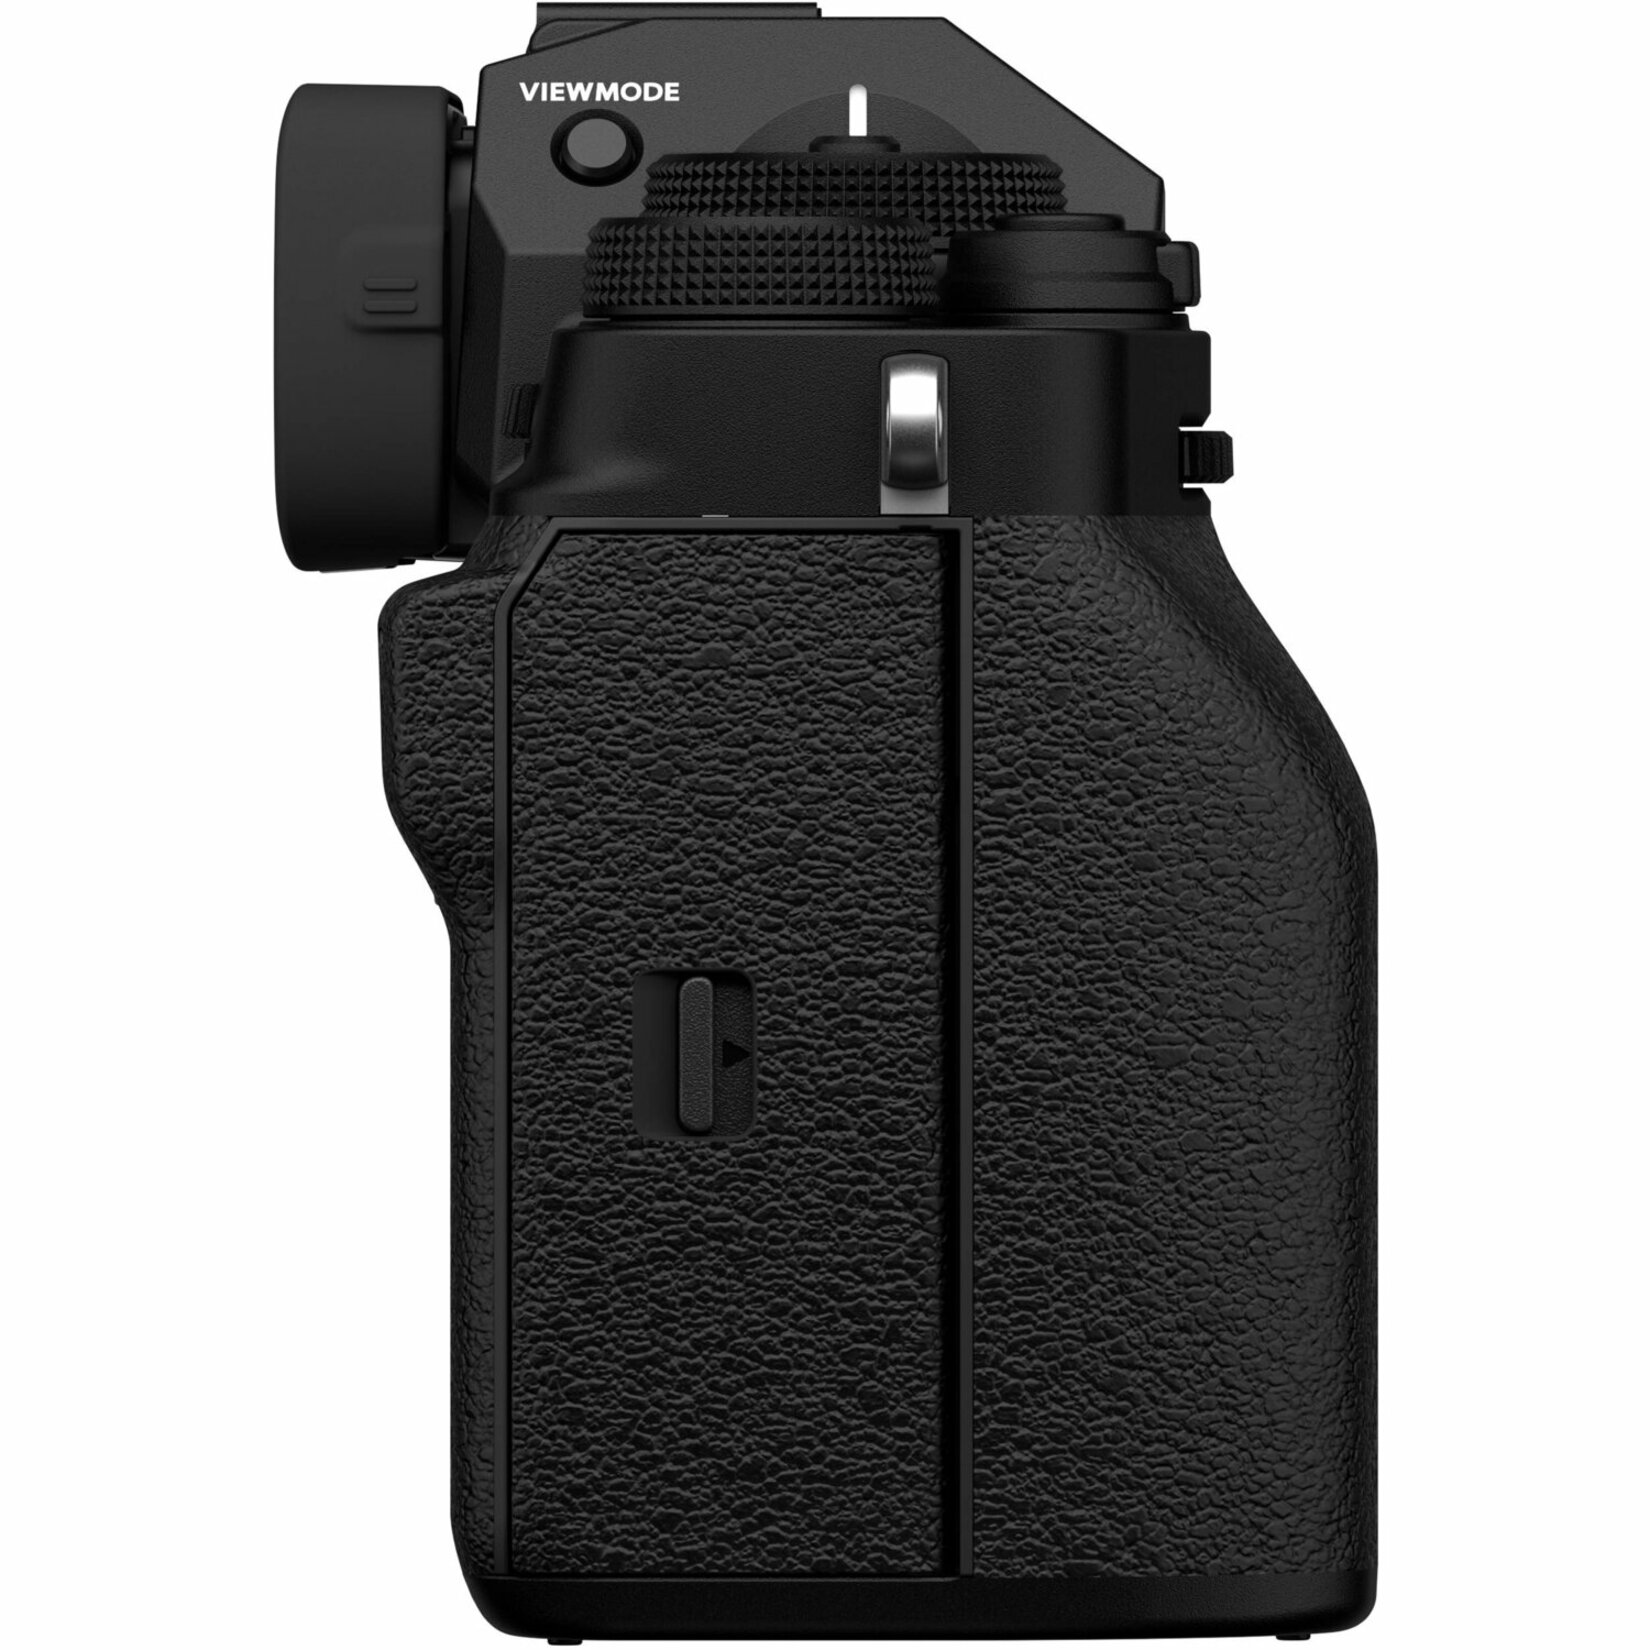 Fujifilm X-T4 26.1 Megapixel Mirrorless Camera Body Only, Black - image 3 of 10